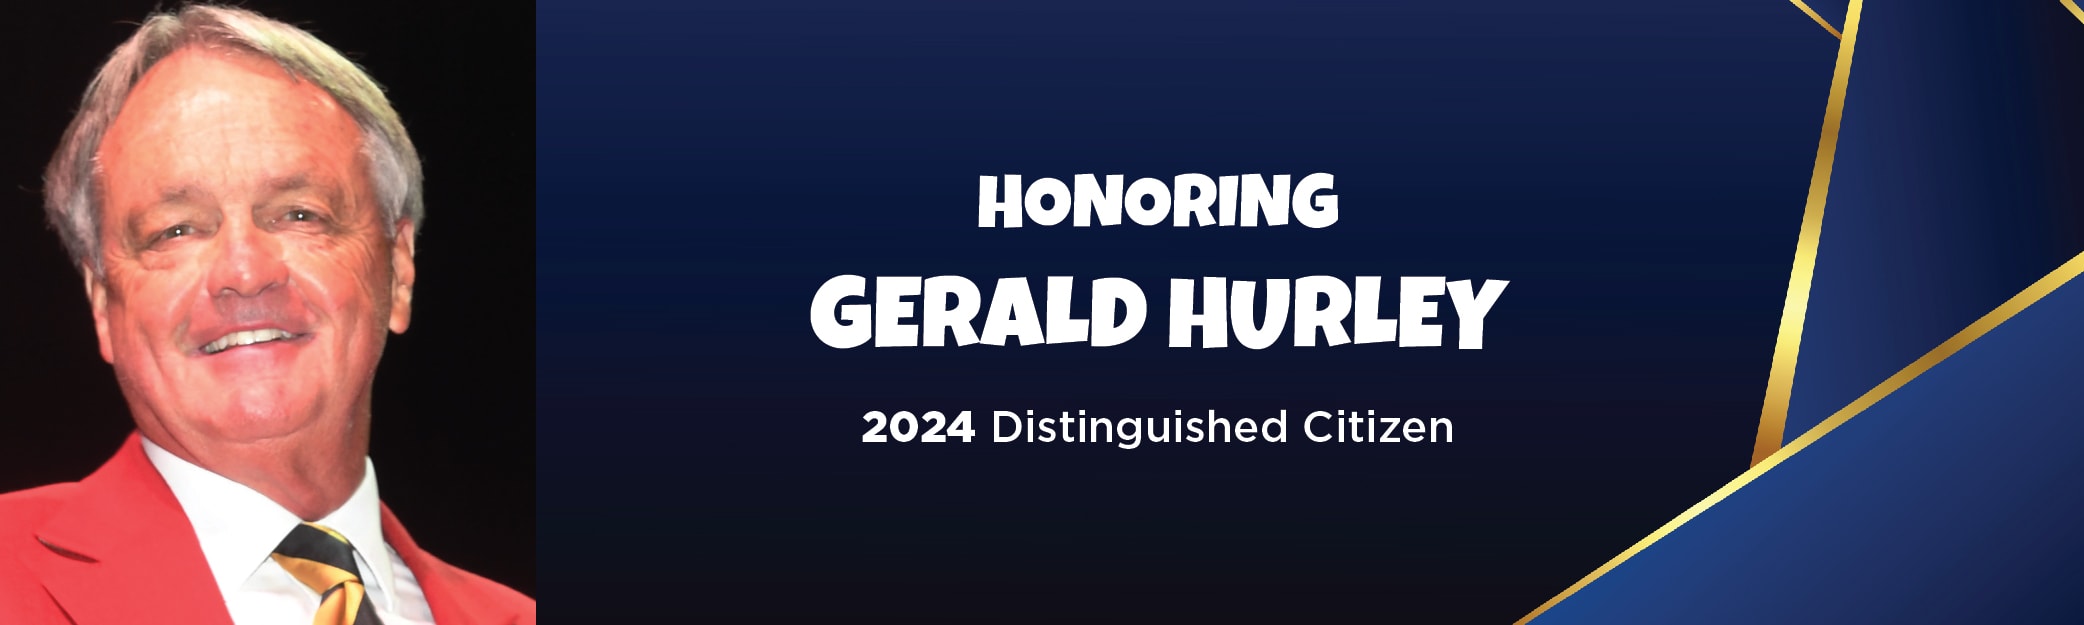 Honoring Gerald Hurley